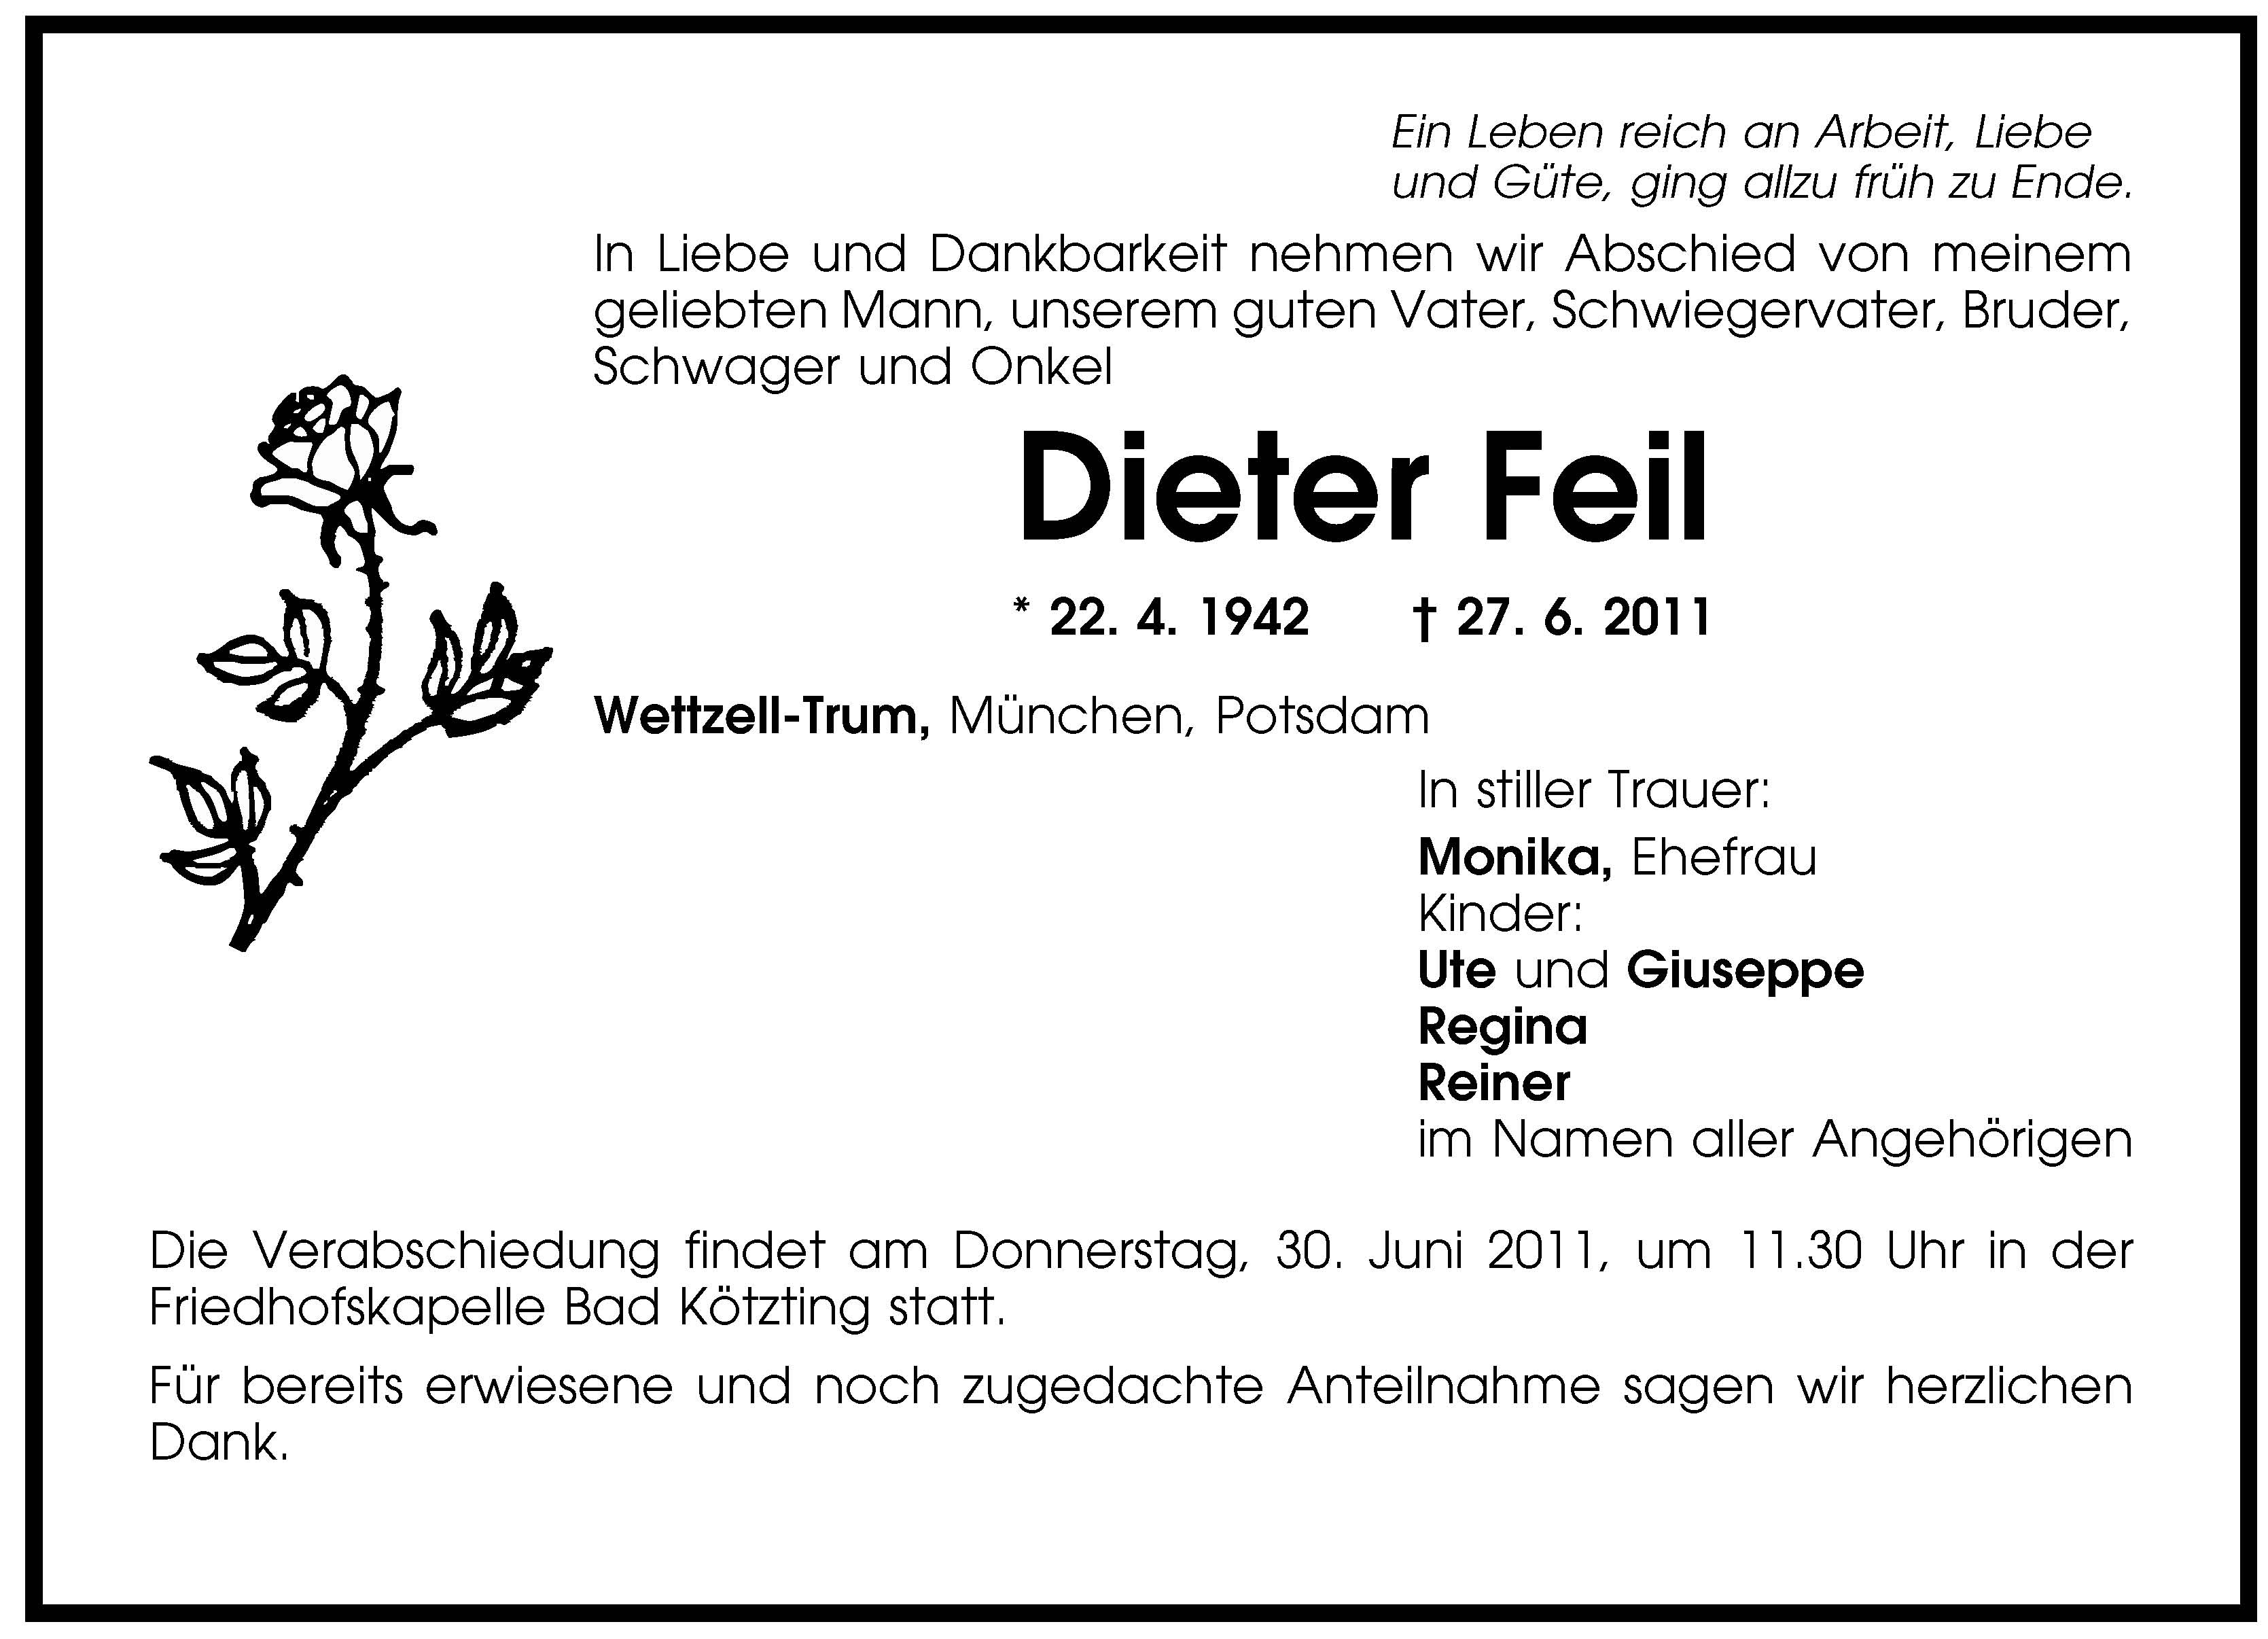 110627-Dieter-Feil.jpg